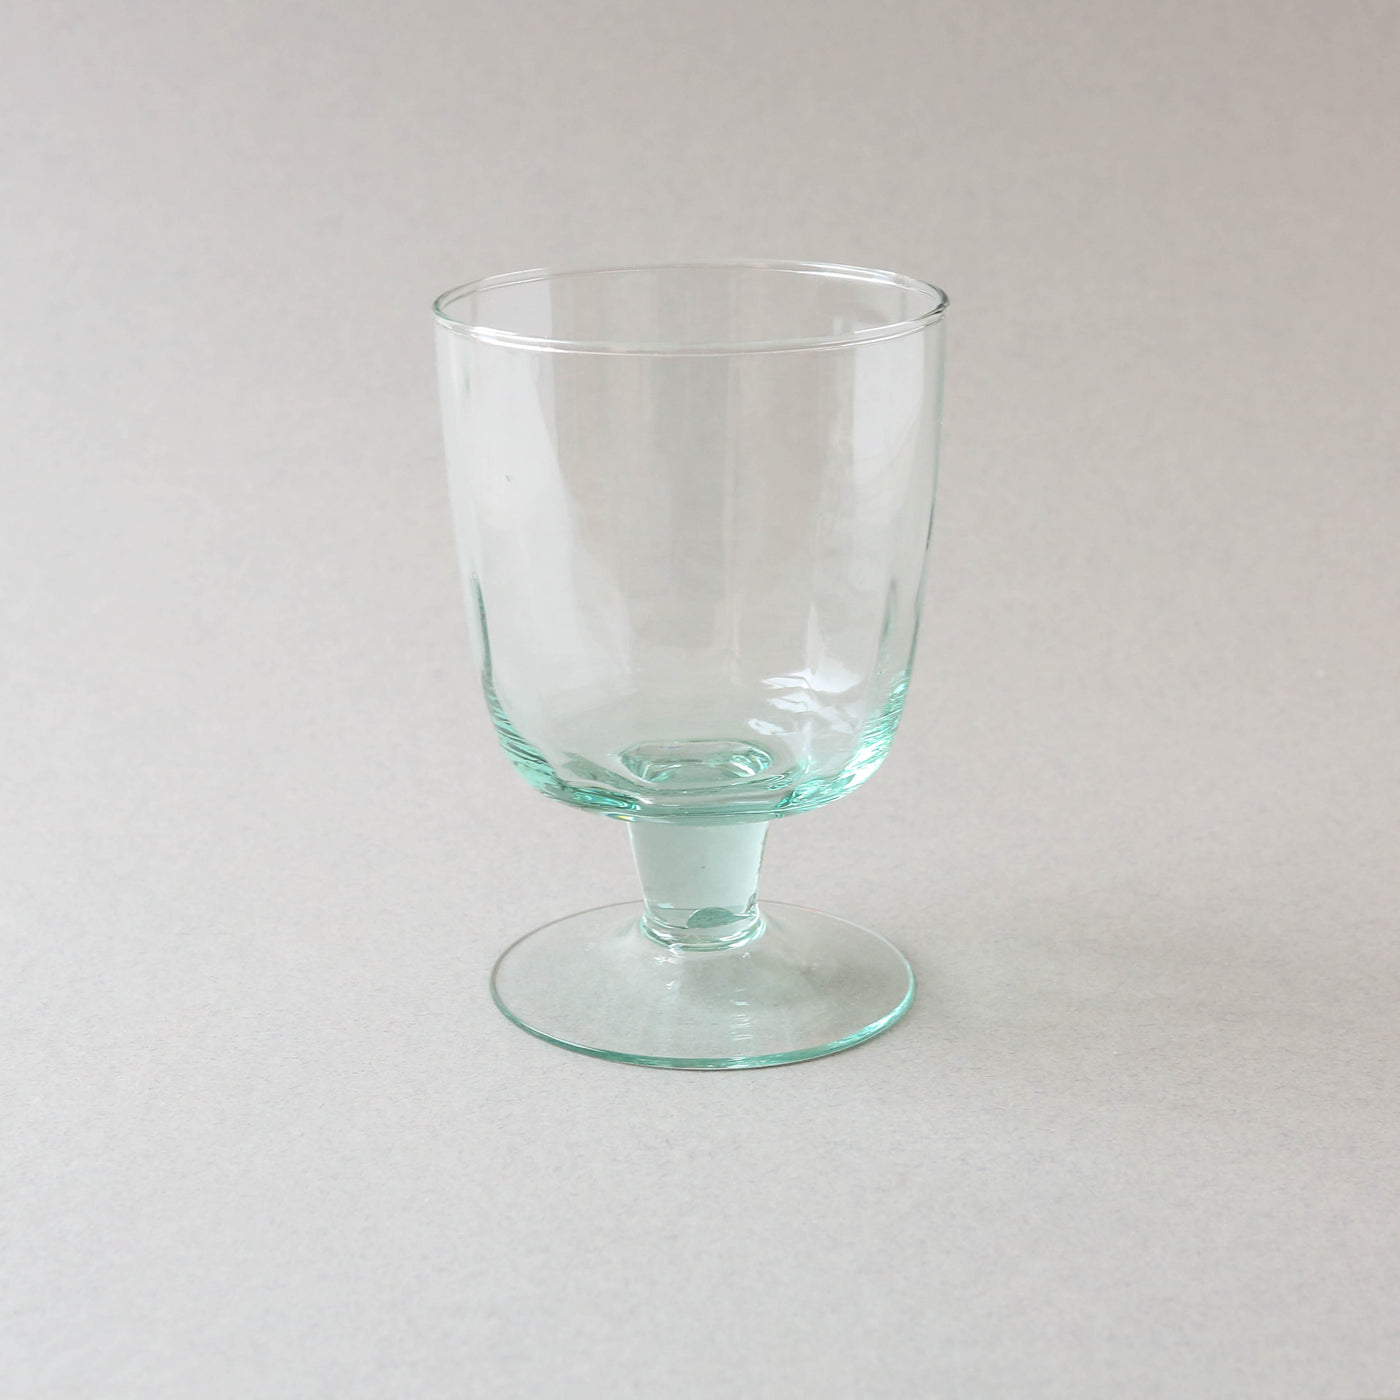 Medium Recycled Stemmed Glass - 450ml